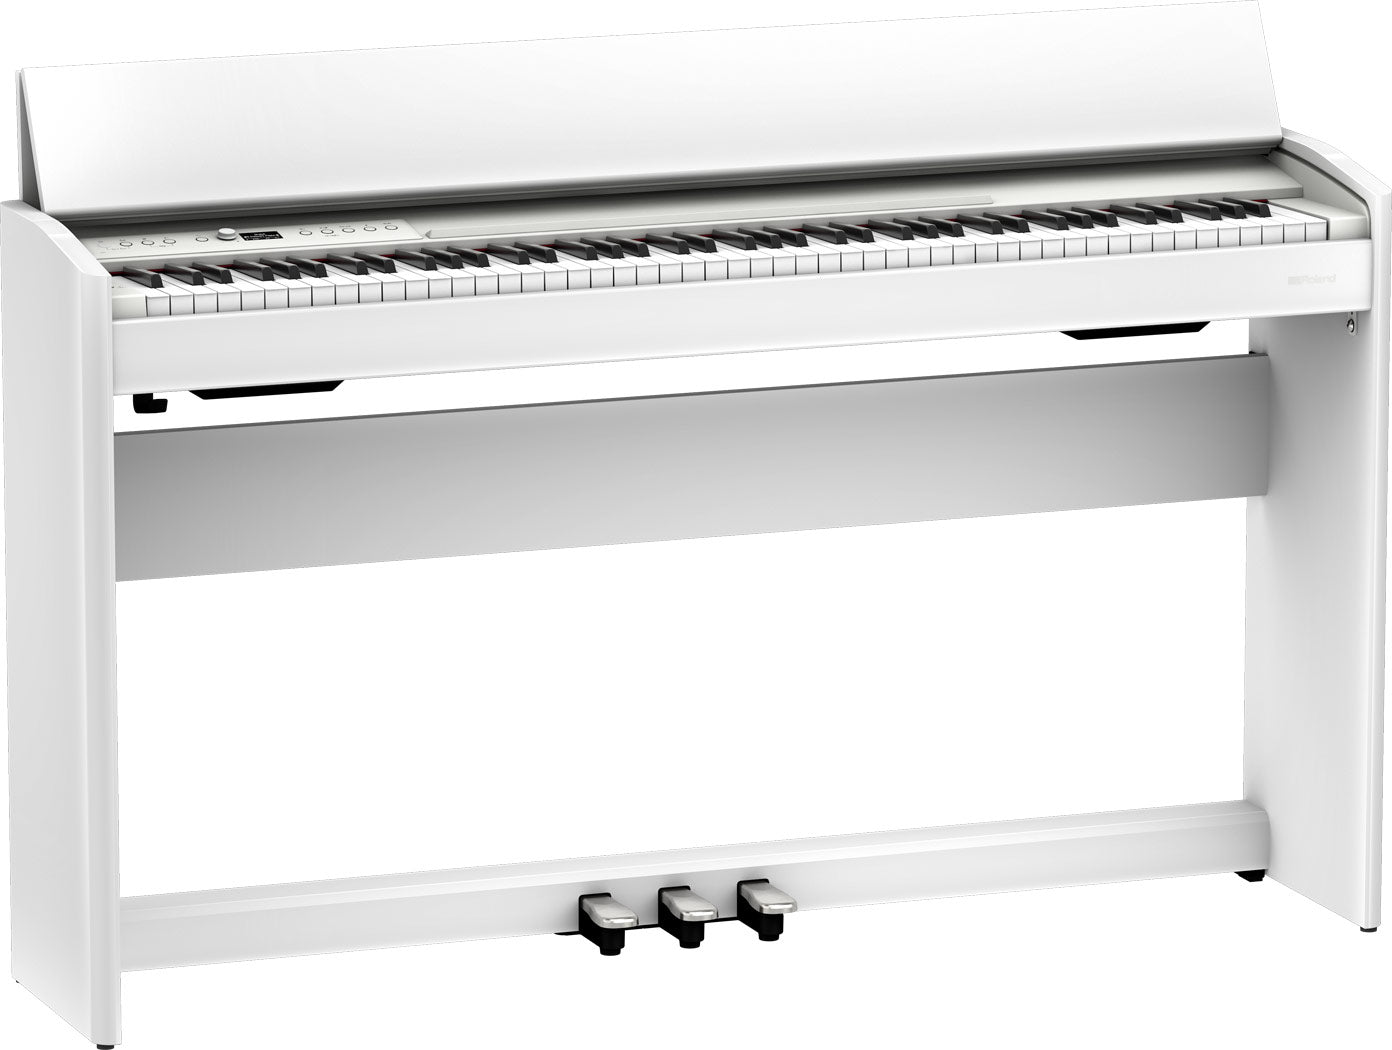 Roland F-701 88-key Digital Home Piano - White (F701 / F 701), ROLAND, DIGITAL PIANO, roland-digital-piano-f701wh, ZOSO MUSIC SDN BHD